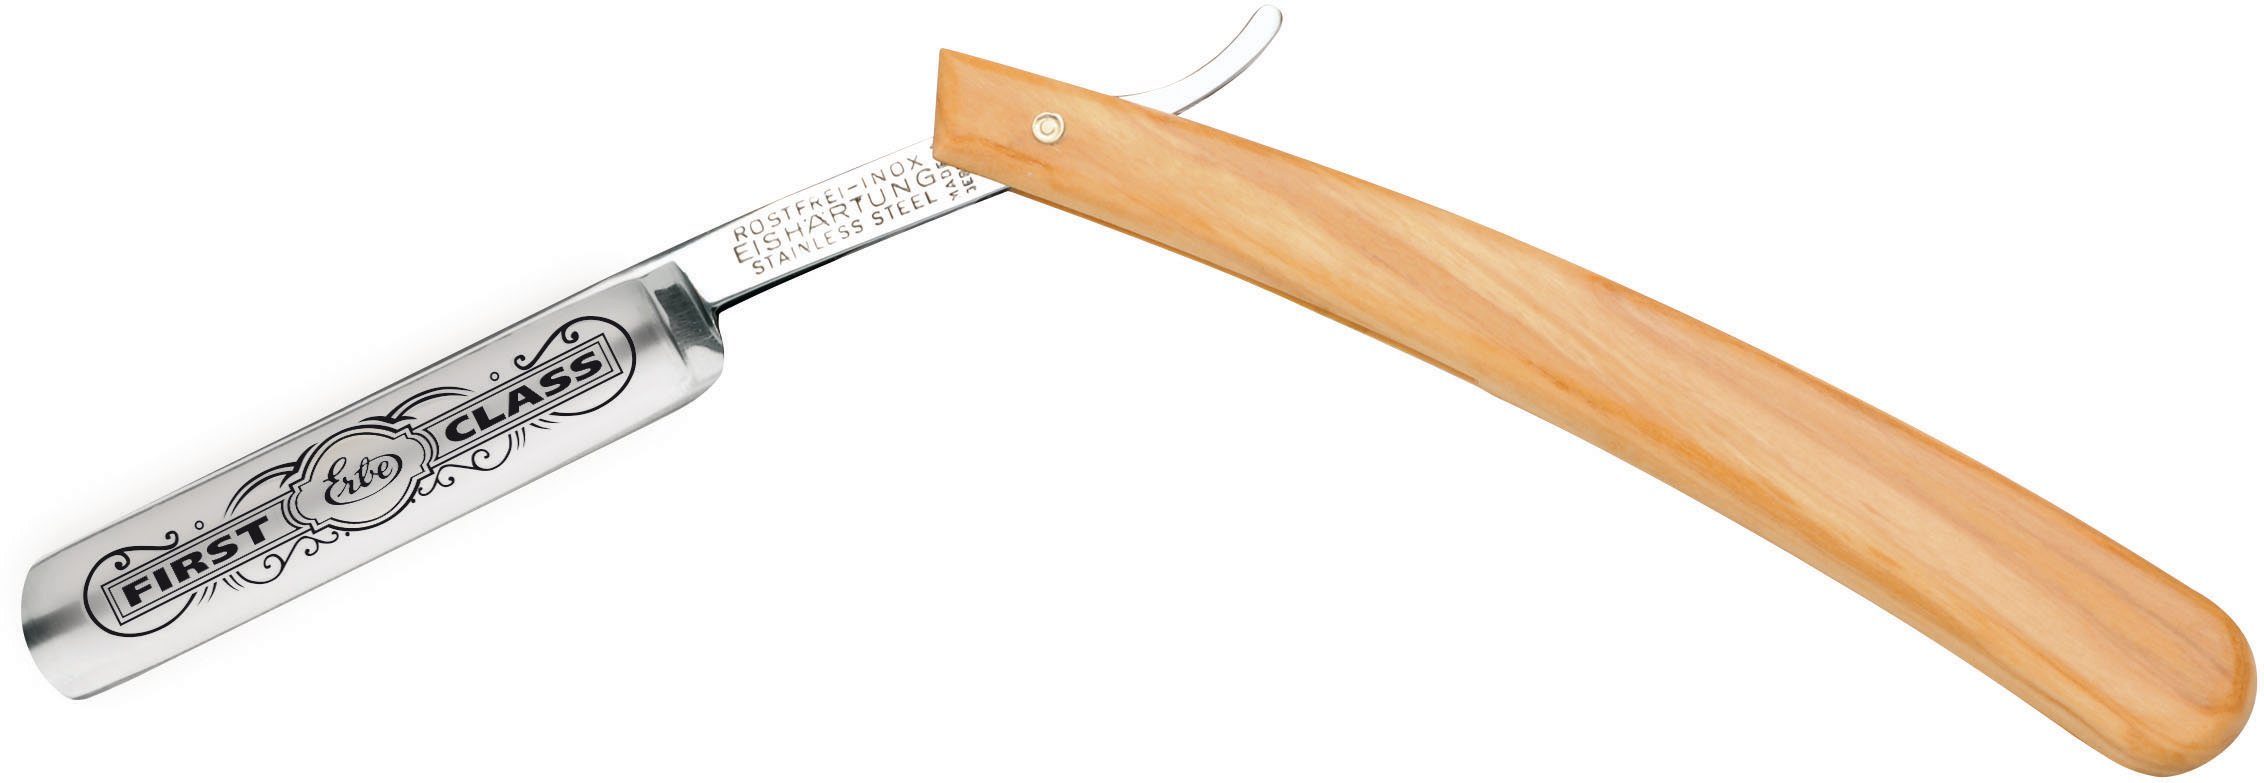 ERBE Qualitäts-Rasiermesser Olivenholz-Griff mit Rasiermesser